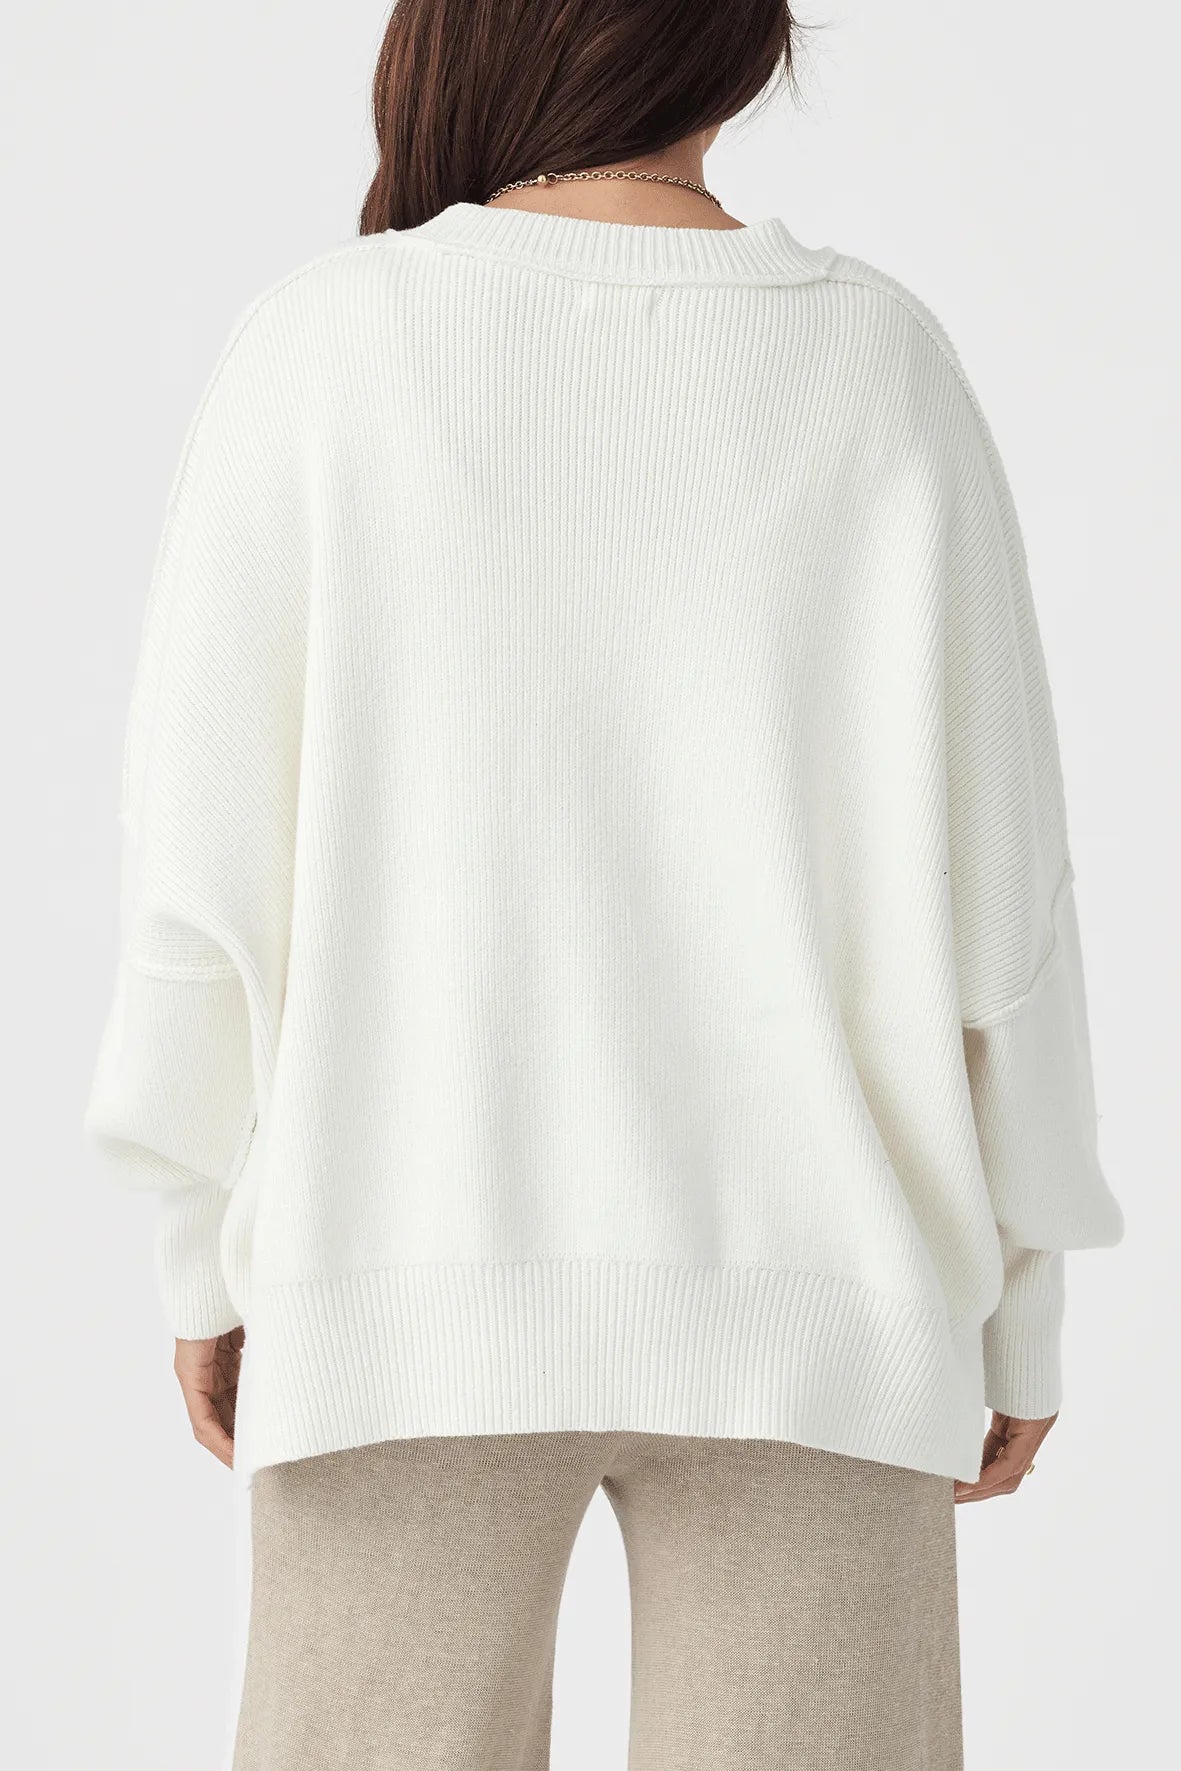 Arcaa Movement | Harper Organic Knit Sweater - Cream